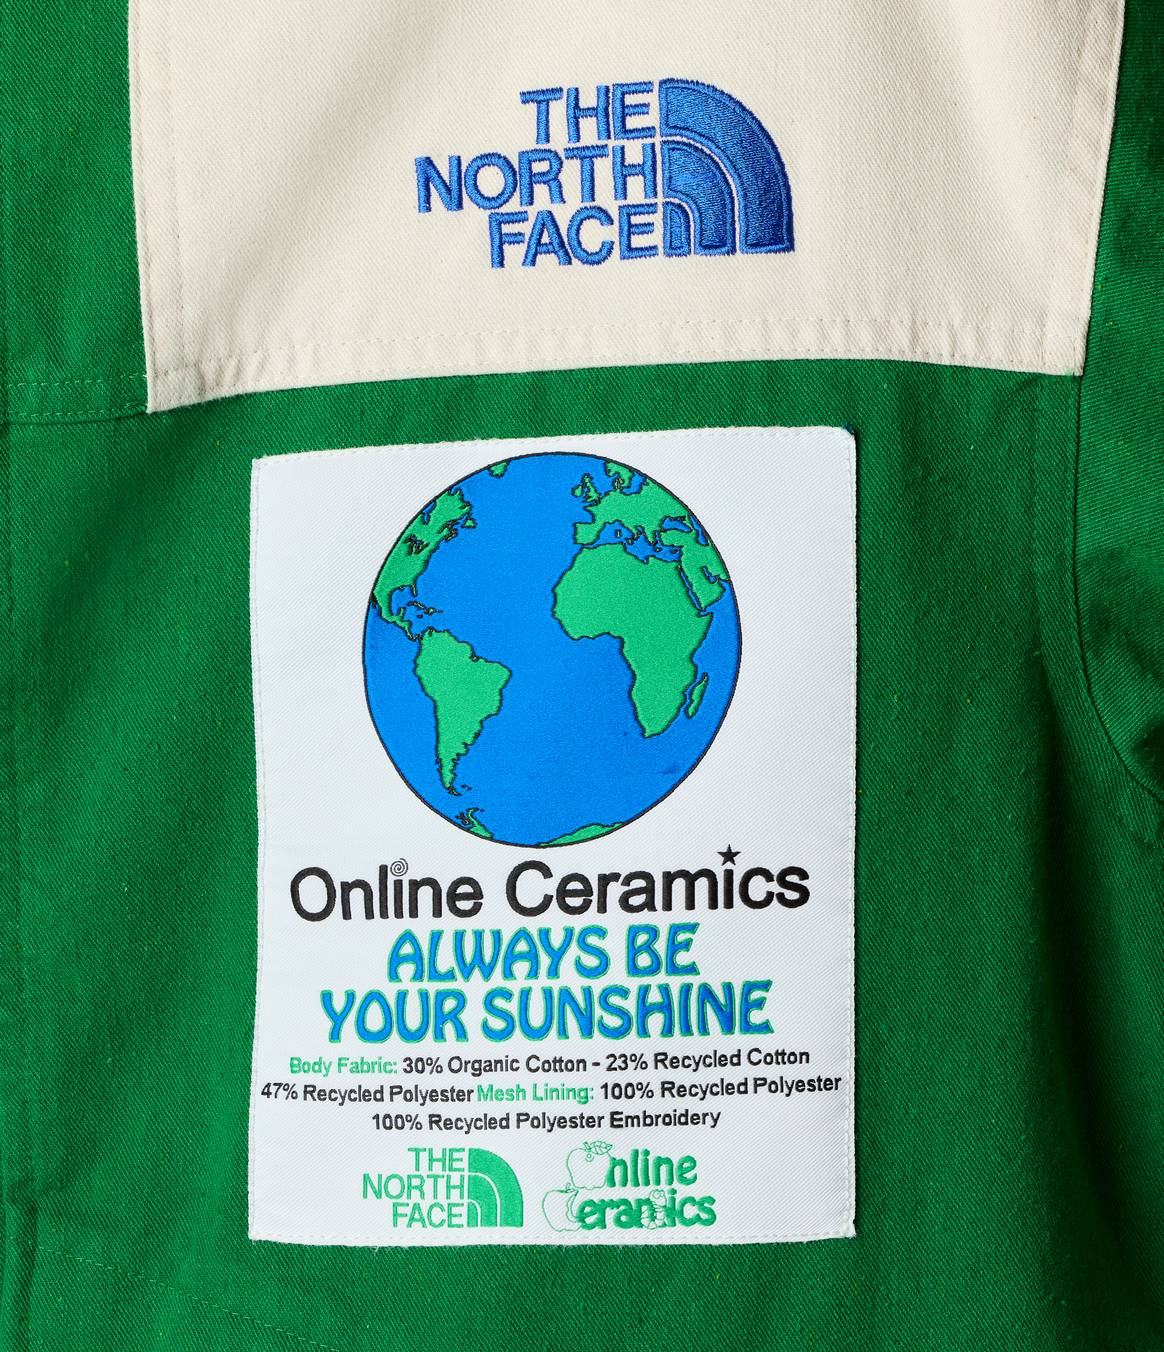 Image: The North Face x Online Ceramics